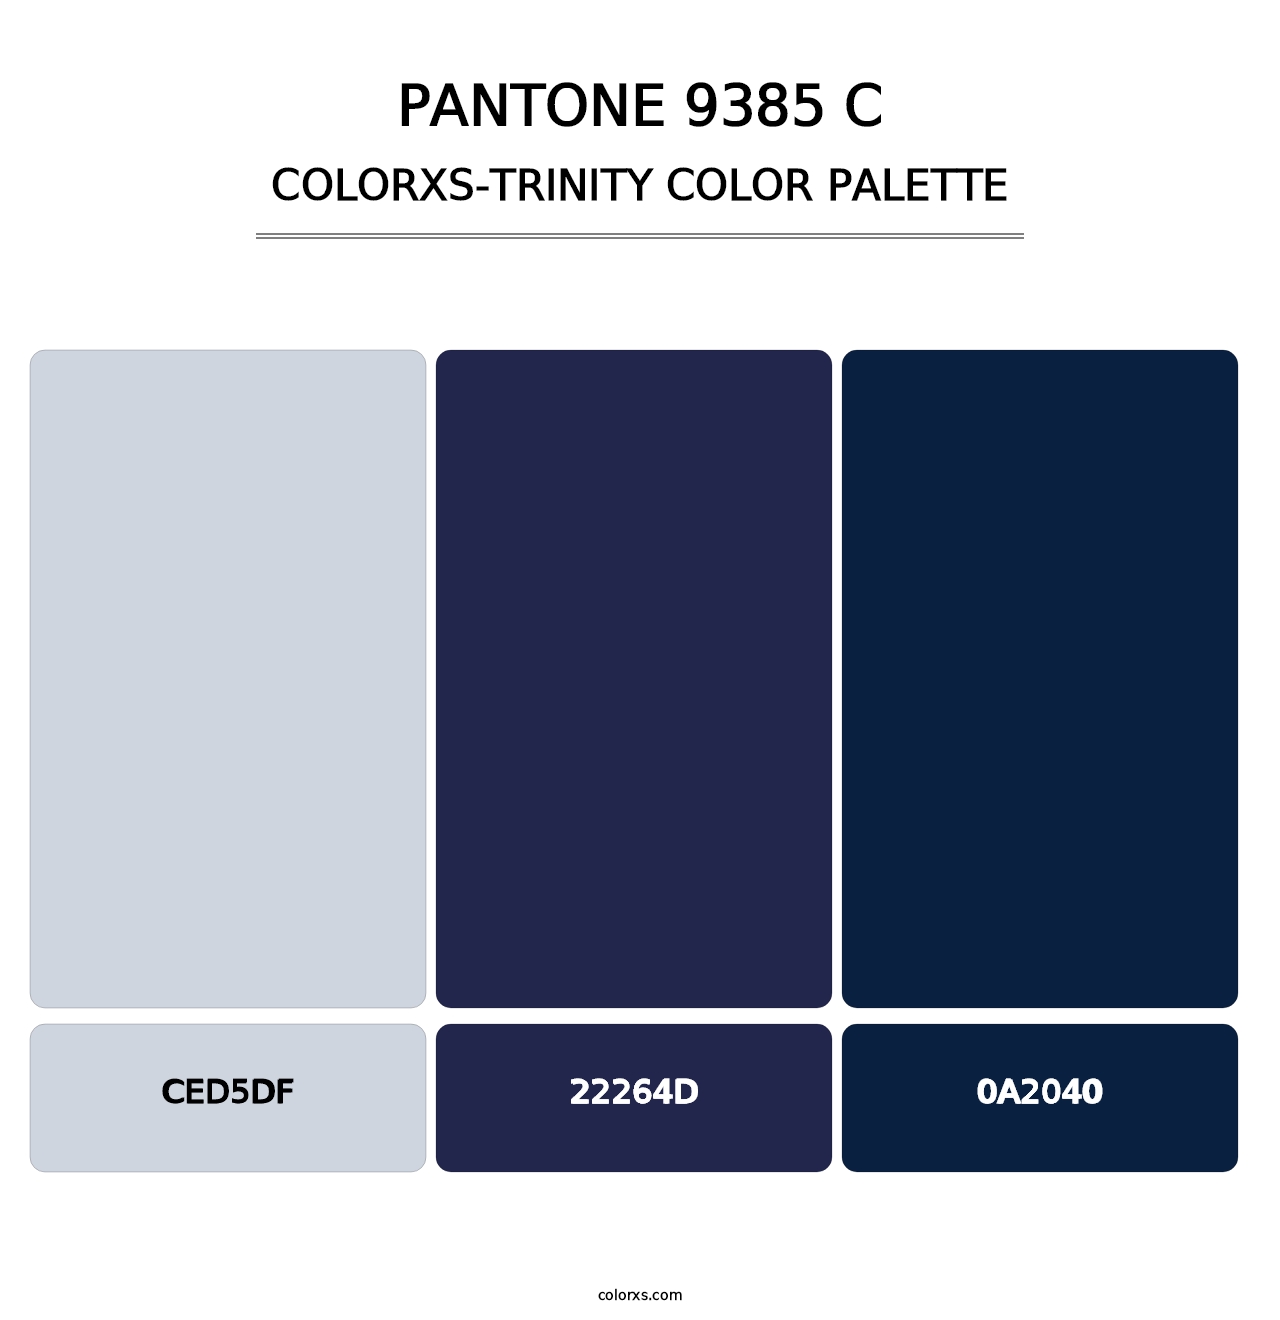 PANTONE 9385 C - Colorxs Trinity Palette